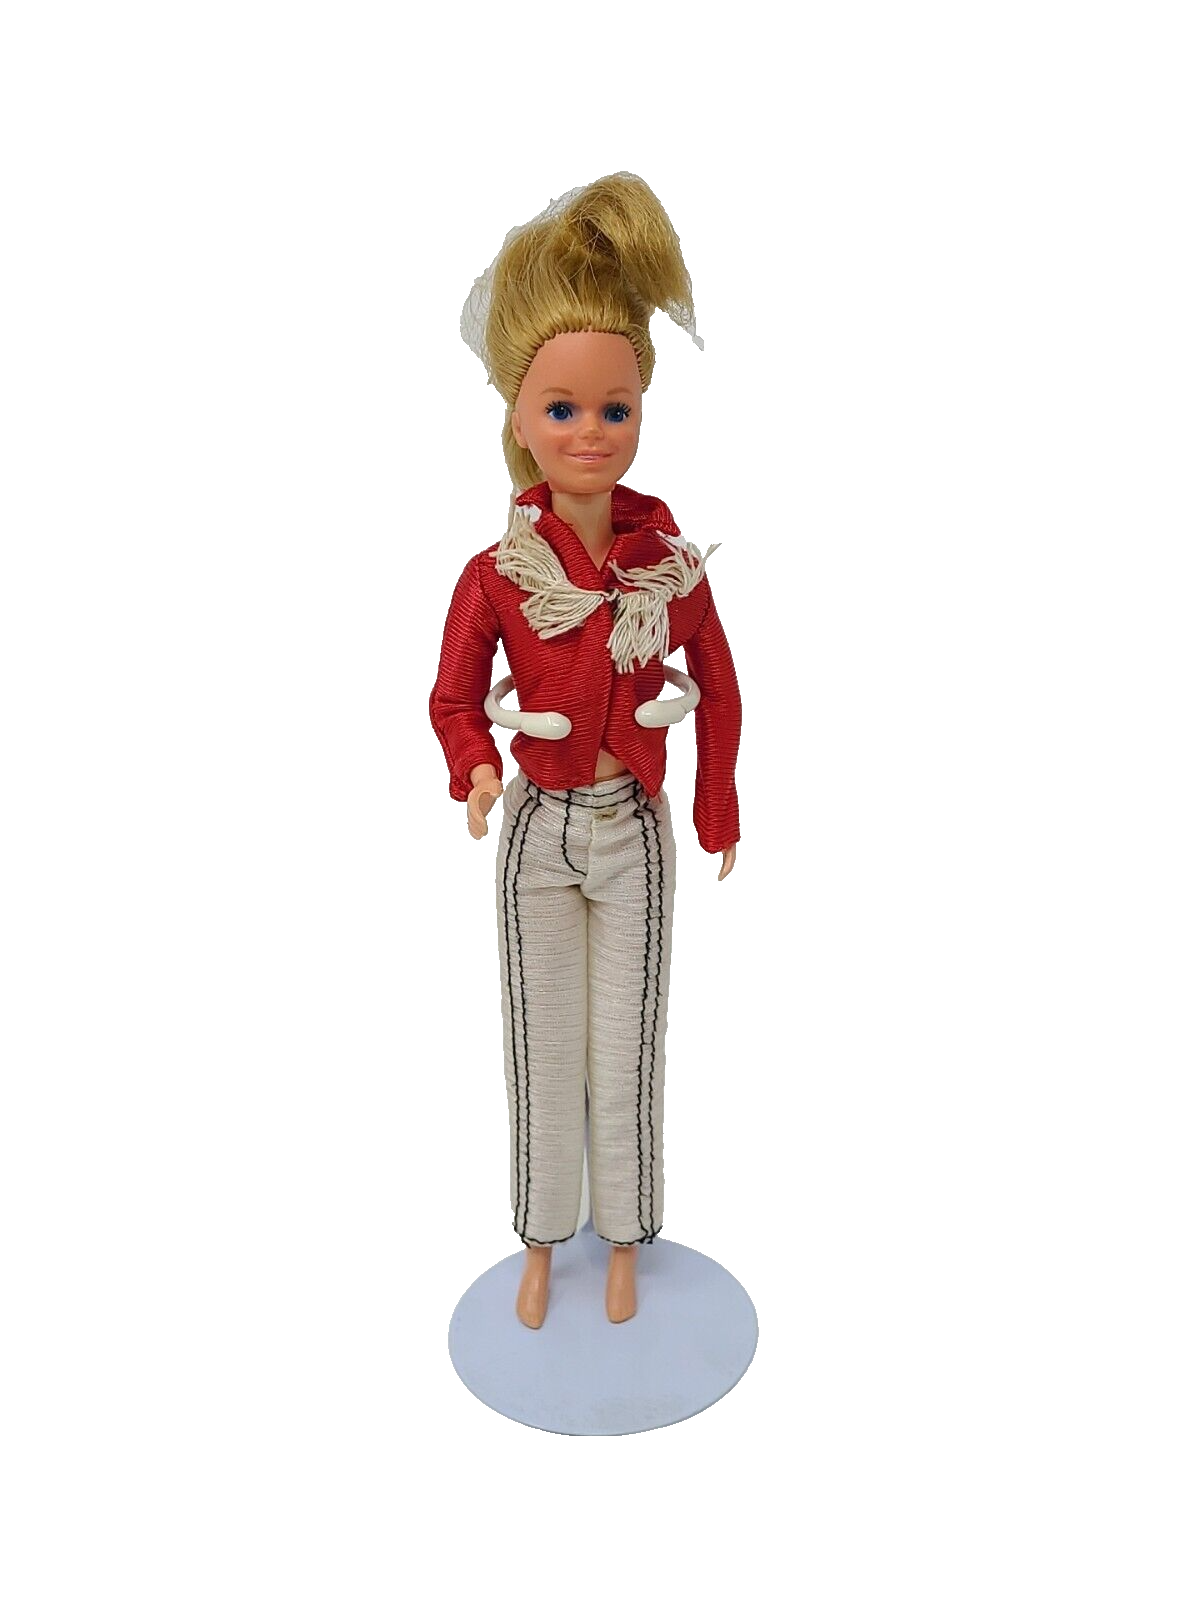 Vintage Barbie Western Skipper 1981 Mattel 5029 Missing Accessories - £12.41 GBP